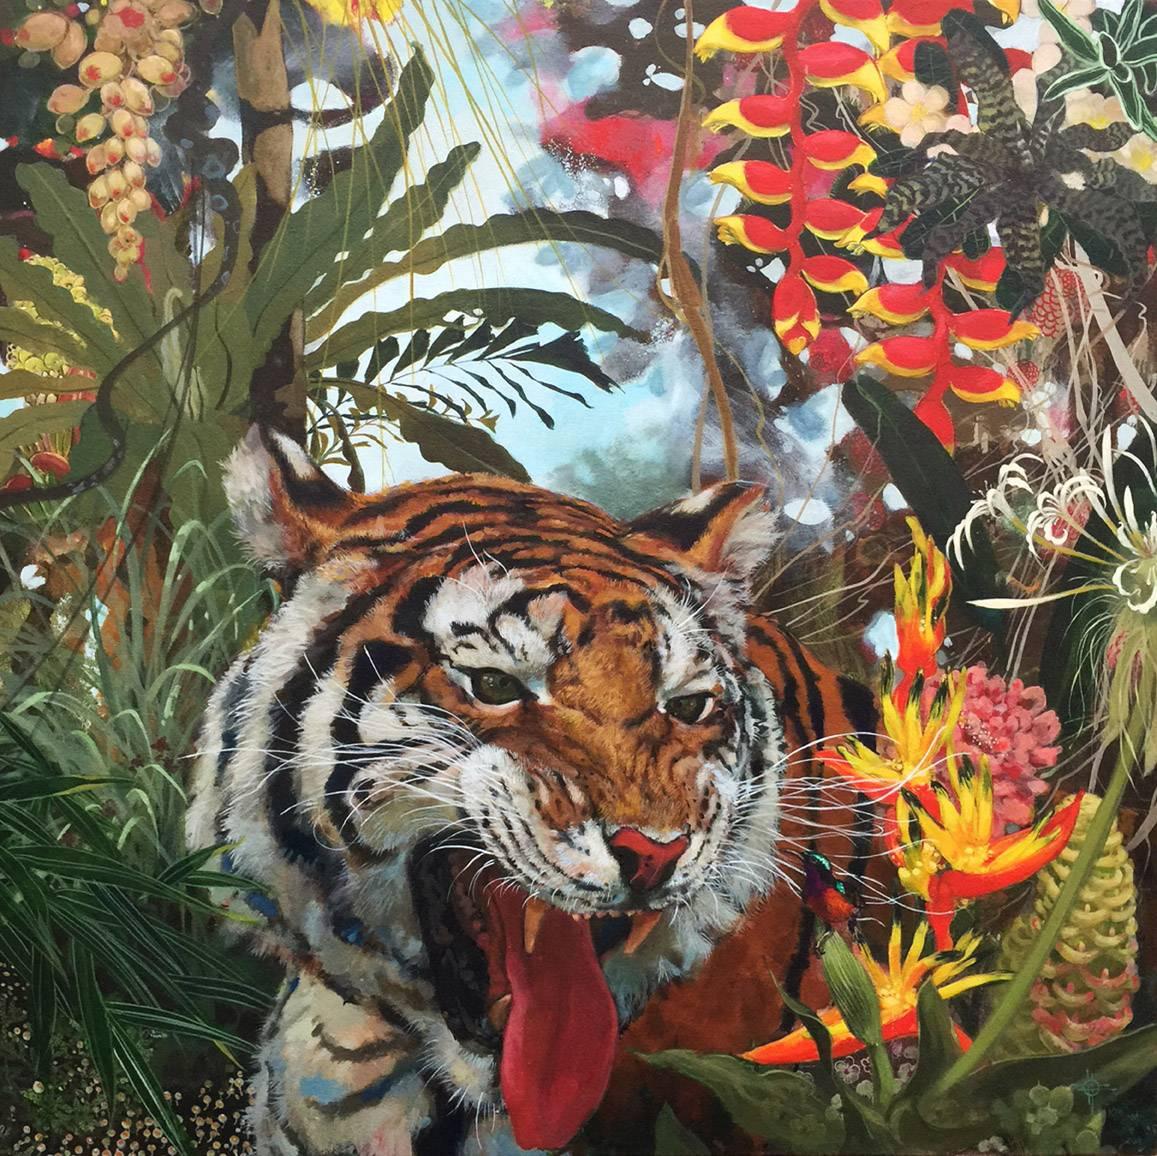 Keng Wai Lee Animal Painting - Sandokan - contemporary vibrant colorful tiger flora jungle acrylic painting